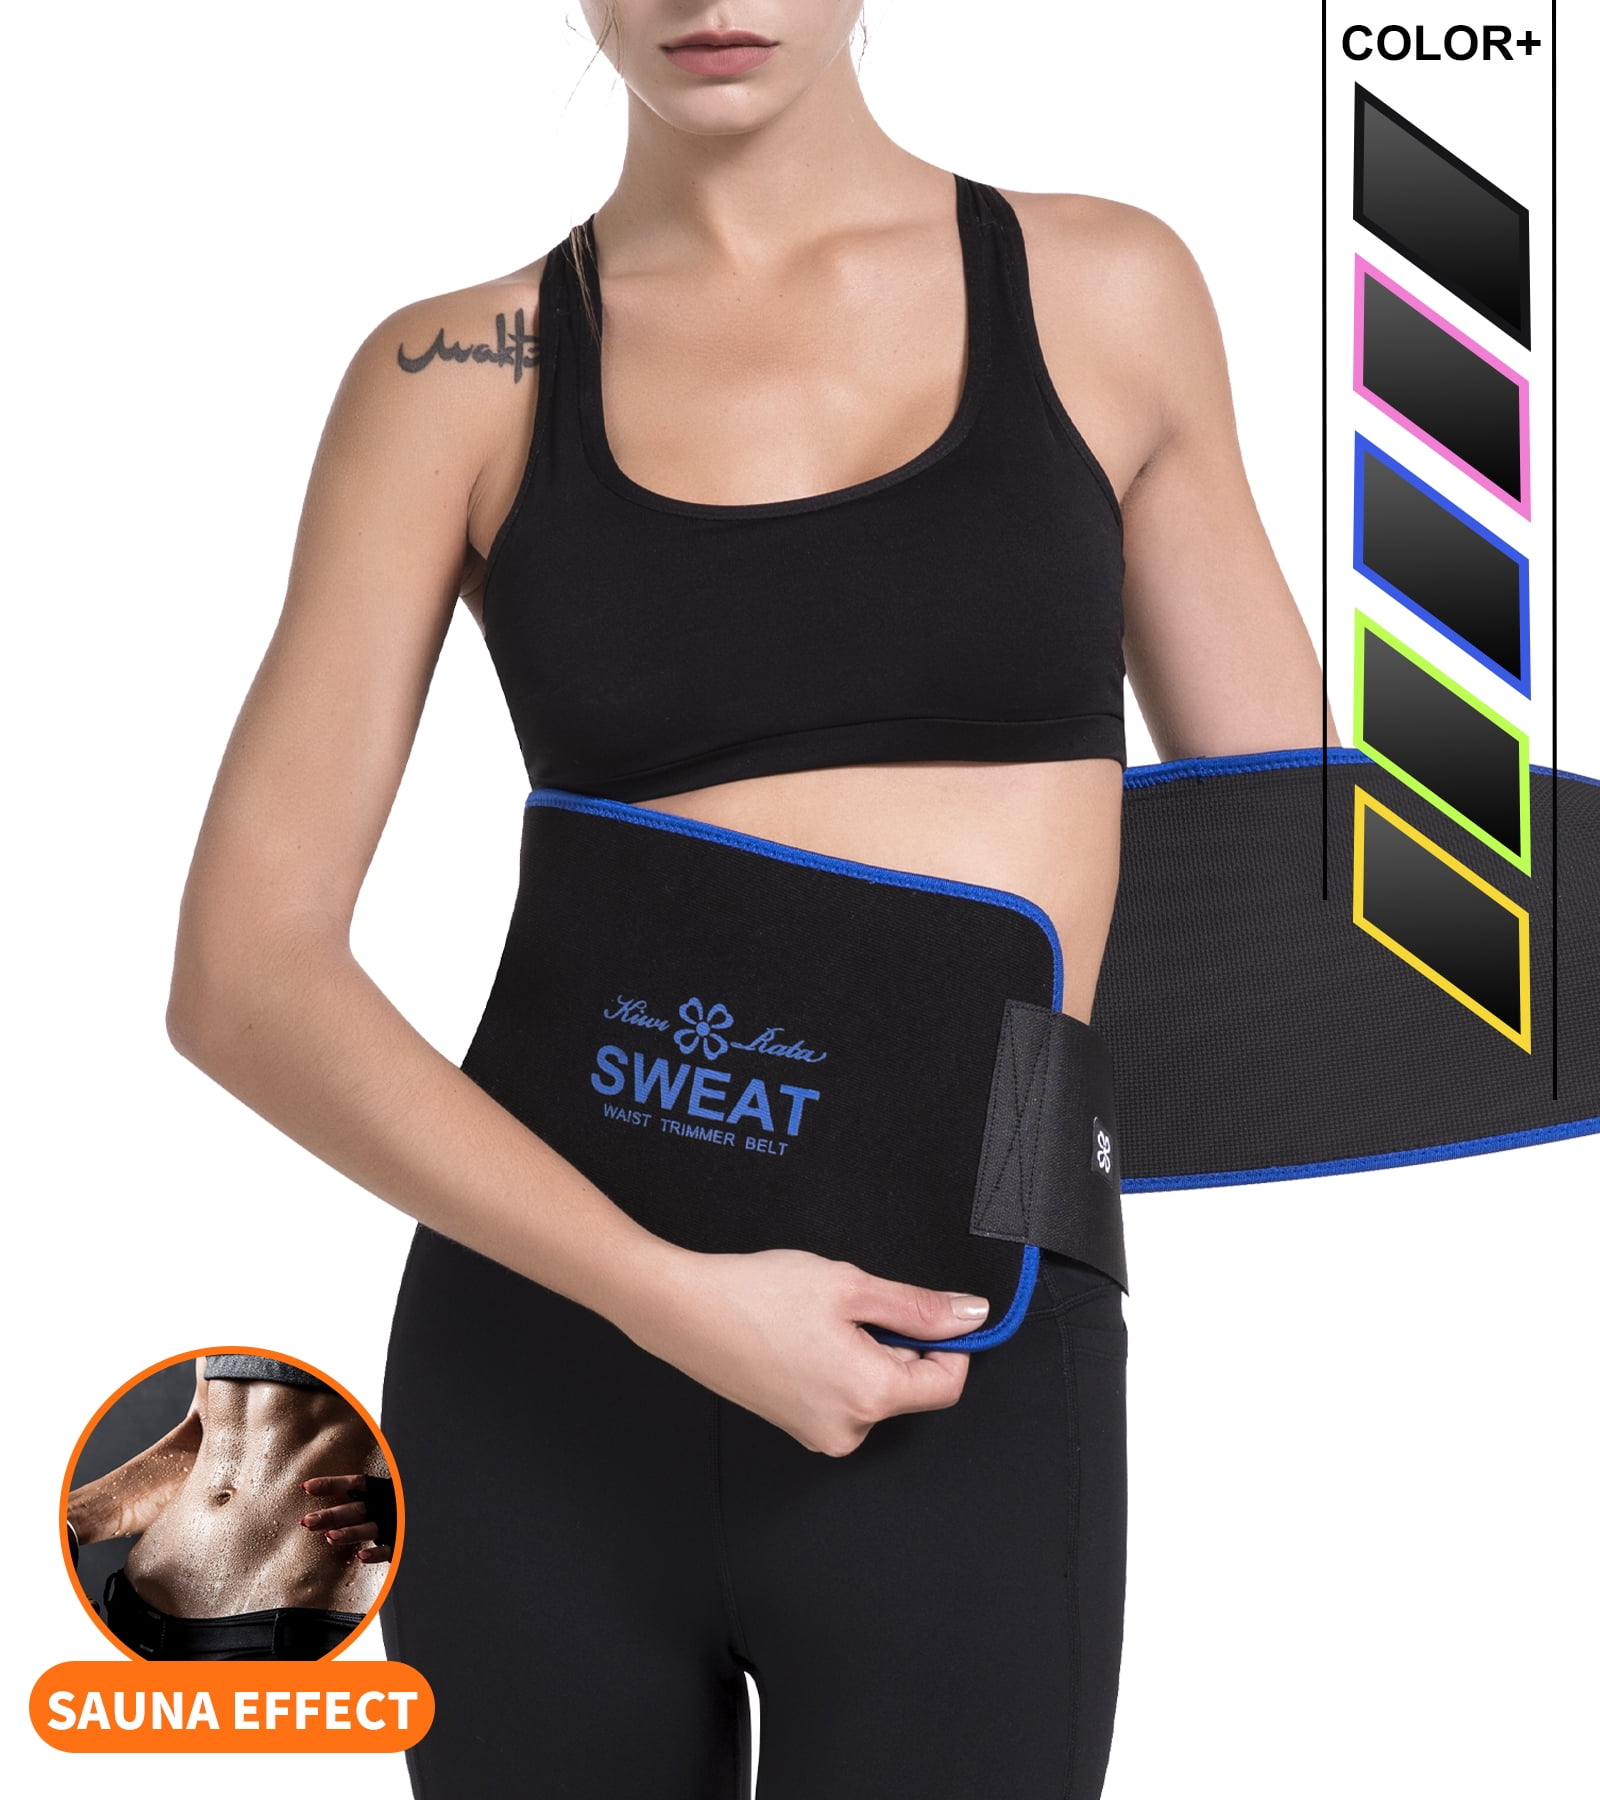 Body Shaper Sauna Belt for Exercise/Workout Waist Trainer for Women Weight Loss 